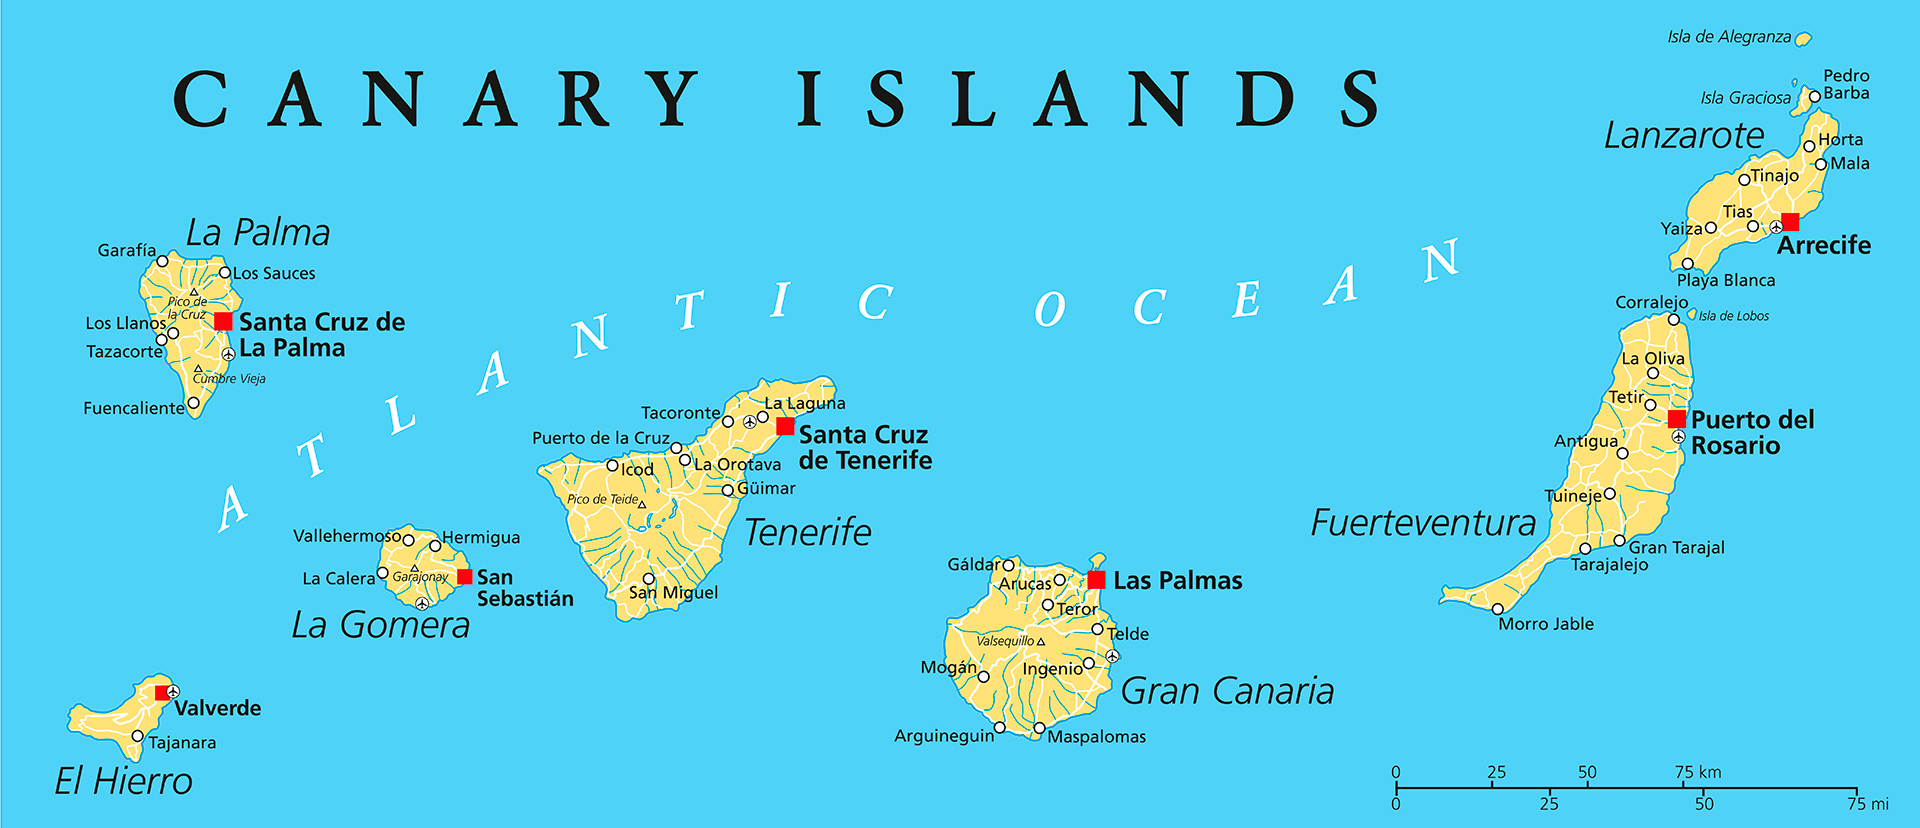 Kanarieöarna karta – Internet ja tietokoneet